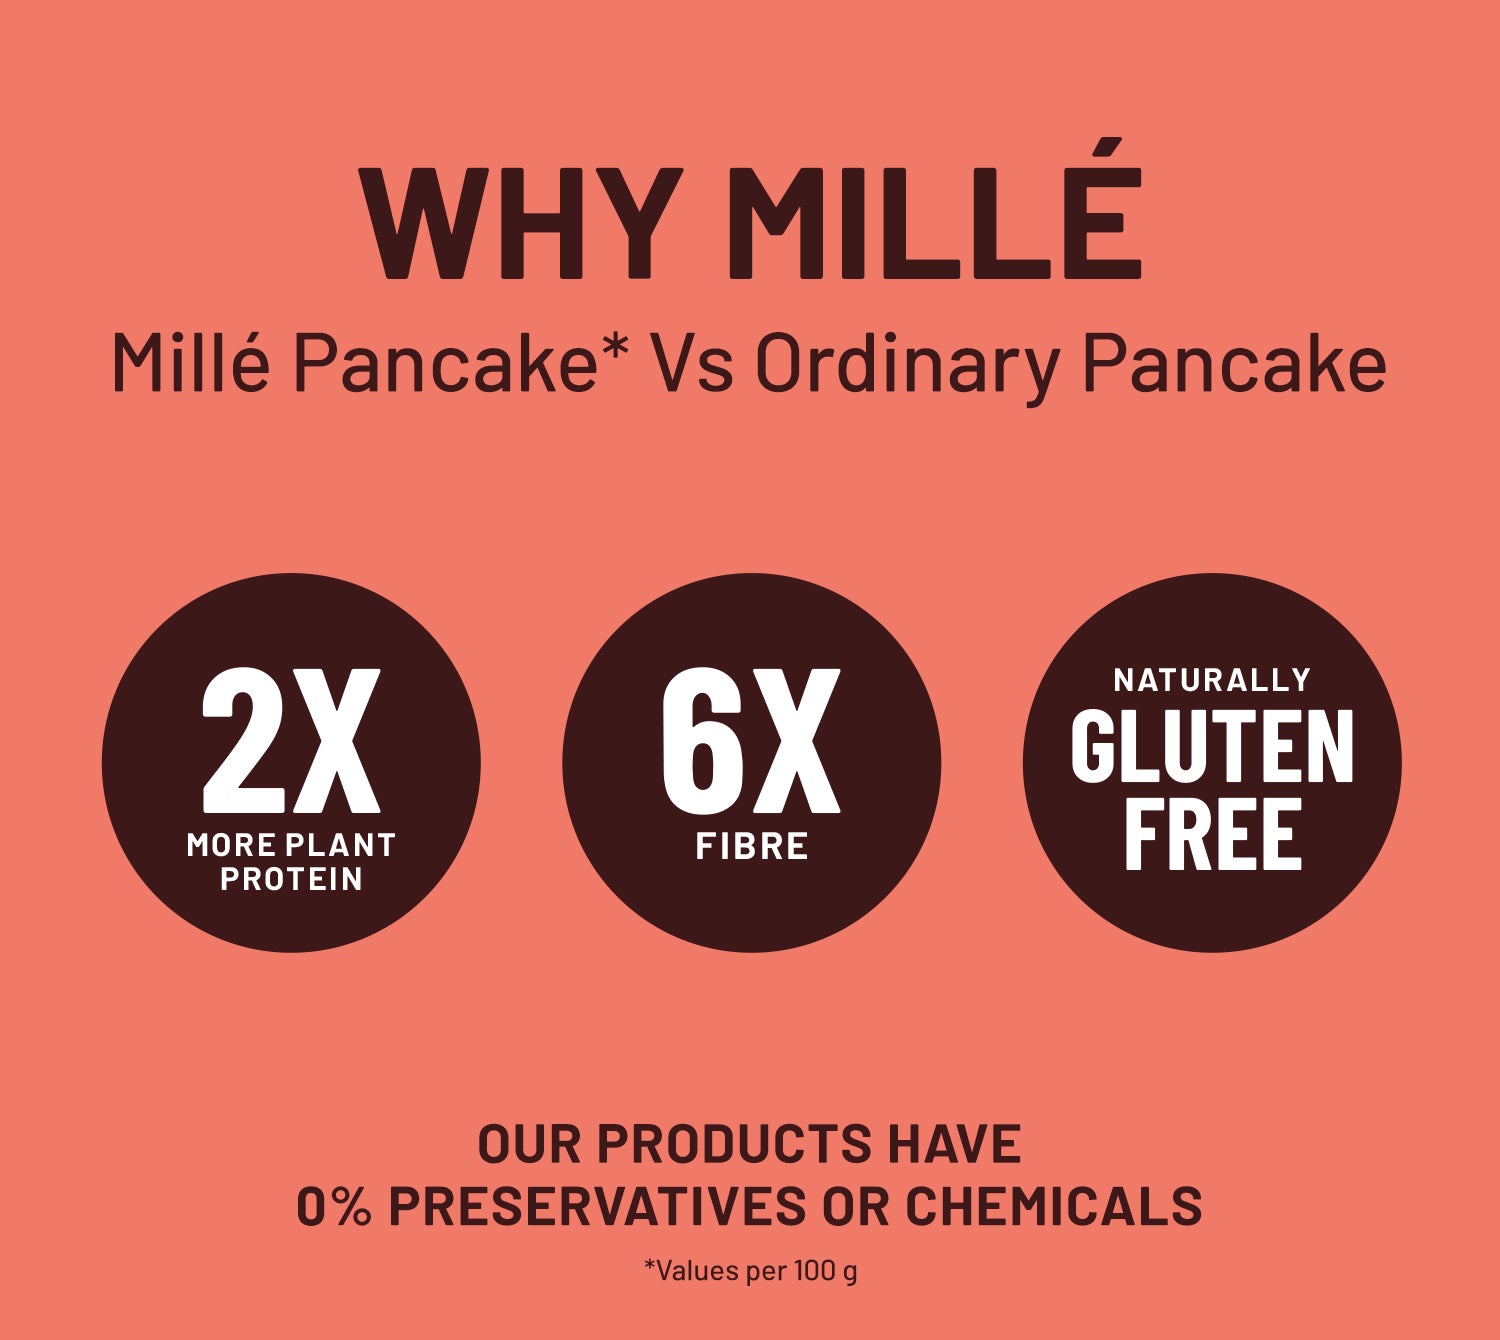 Mille vs ordinary pancake